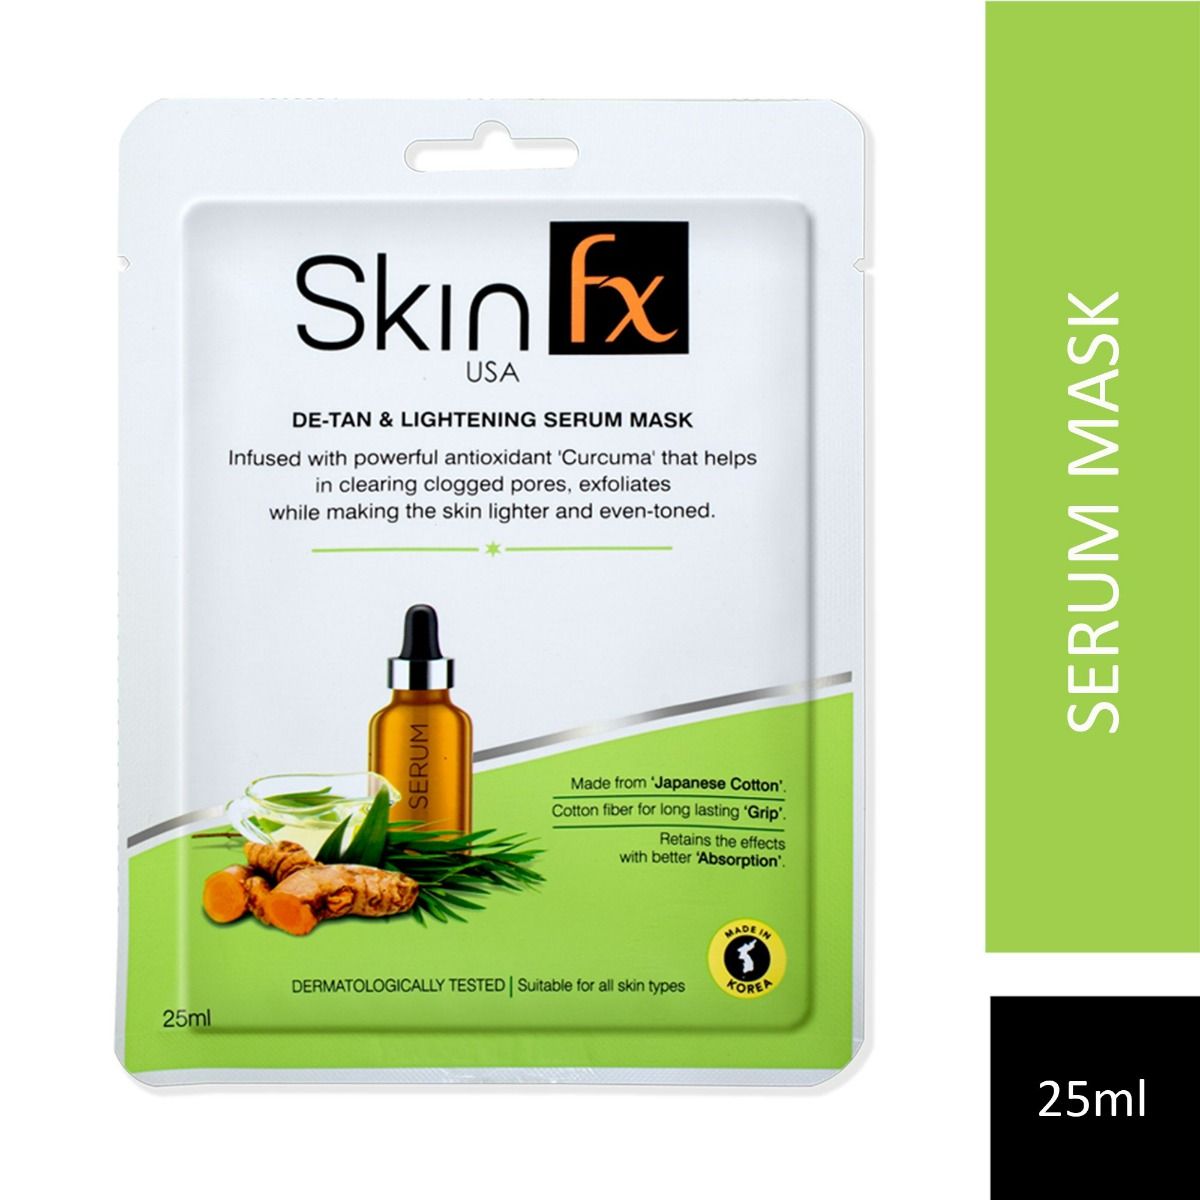 Skin Fx De-Tan & Lightening Serum Mask, 25 ml, Pack of 1 